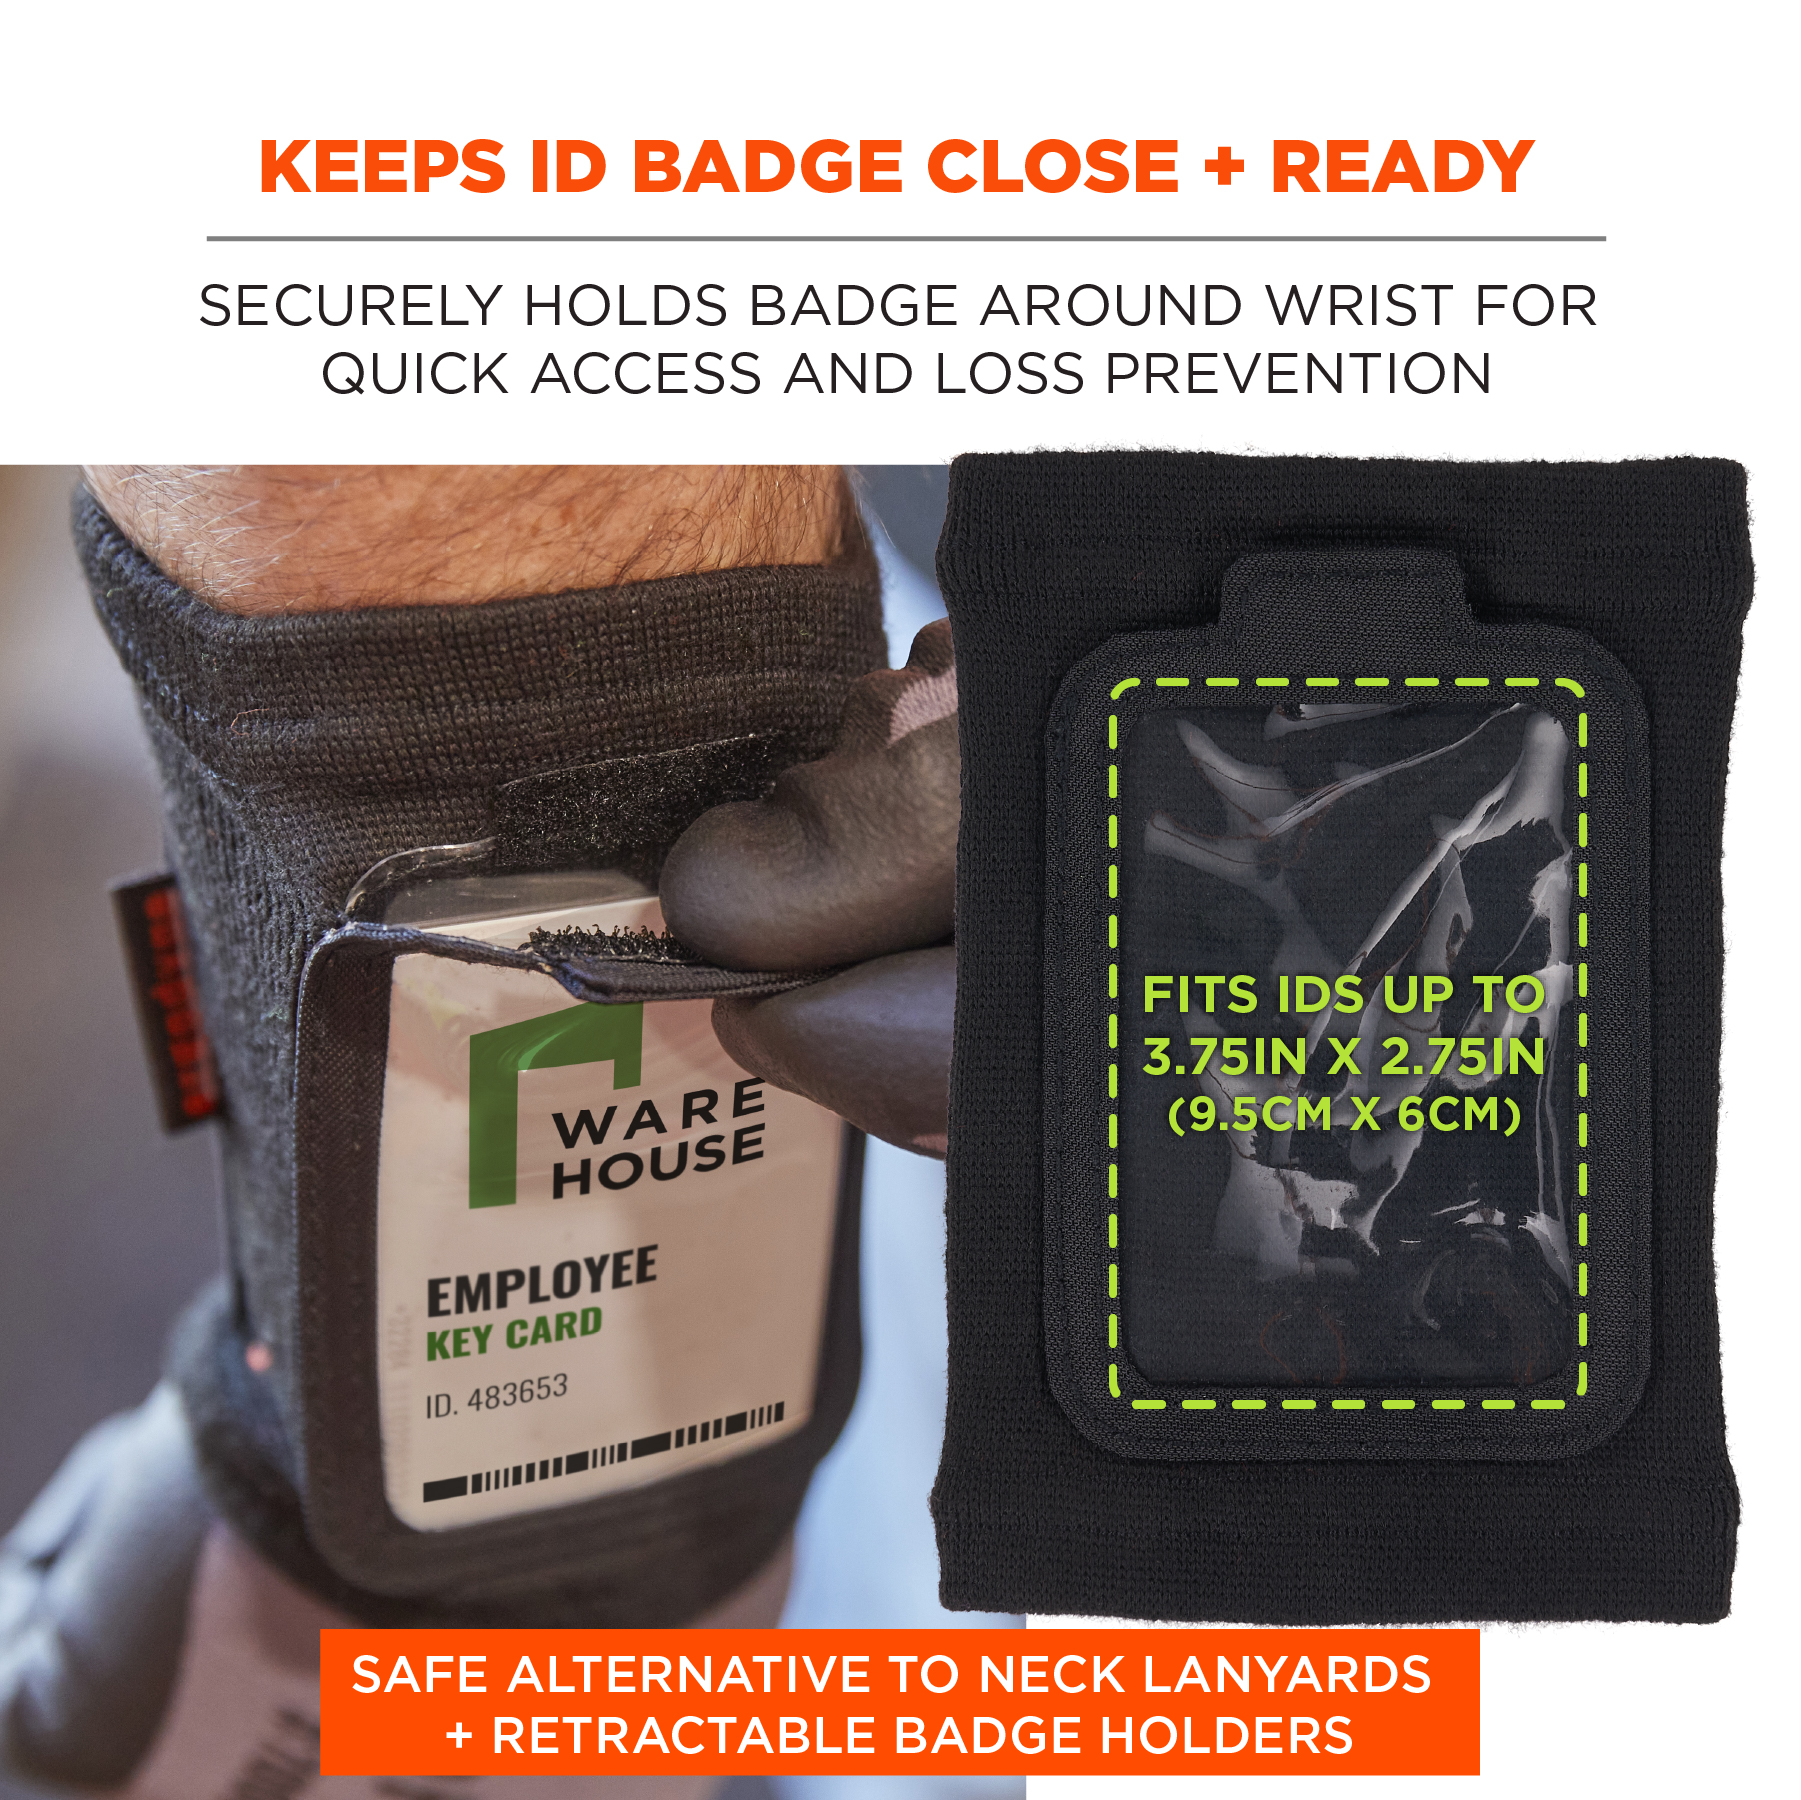 Wrist ID/Badge Holder